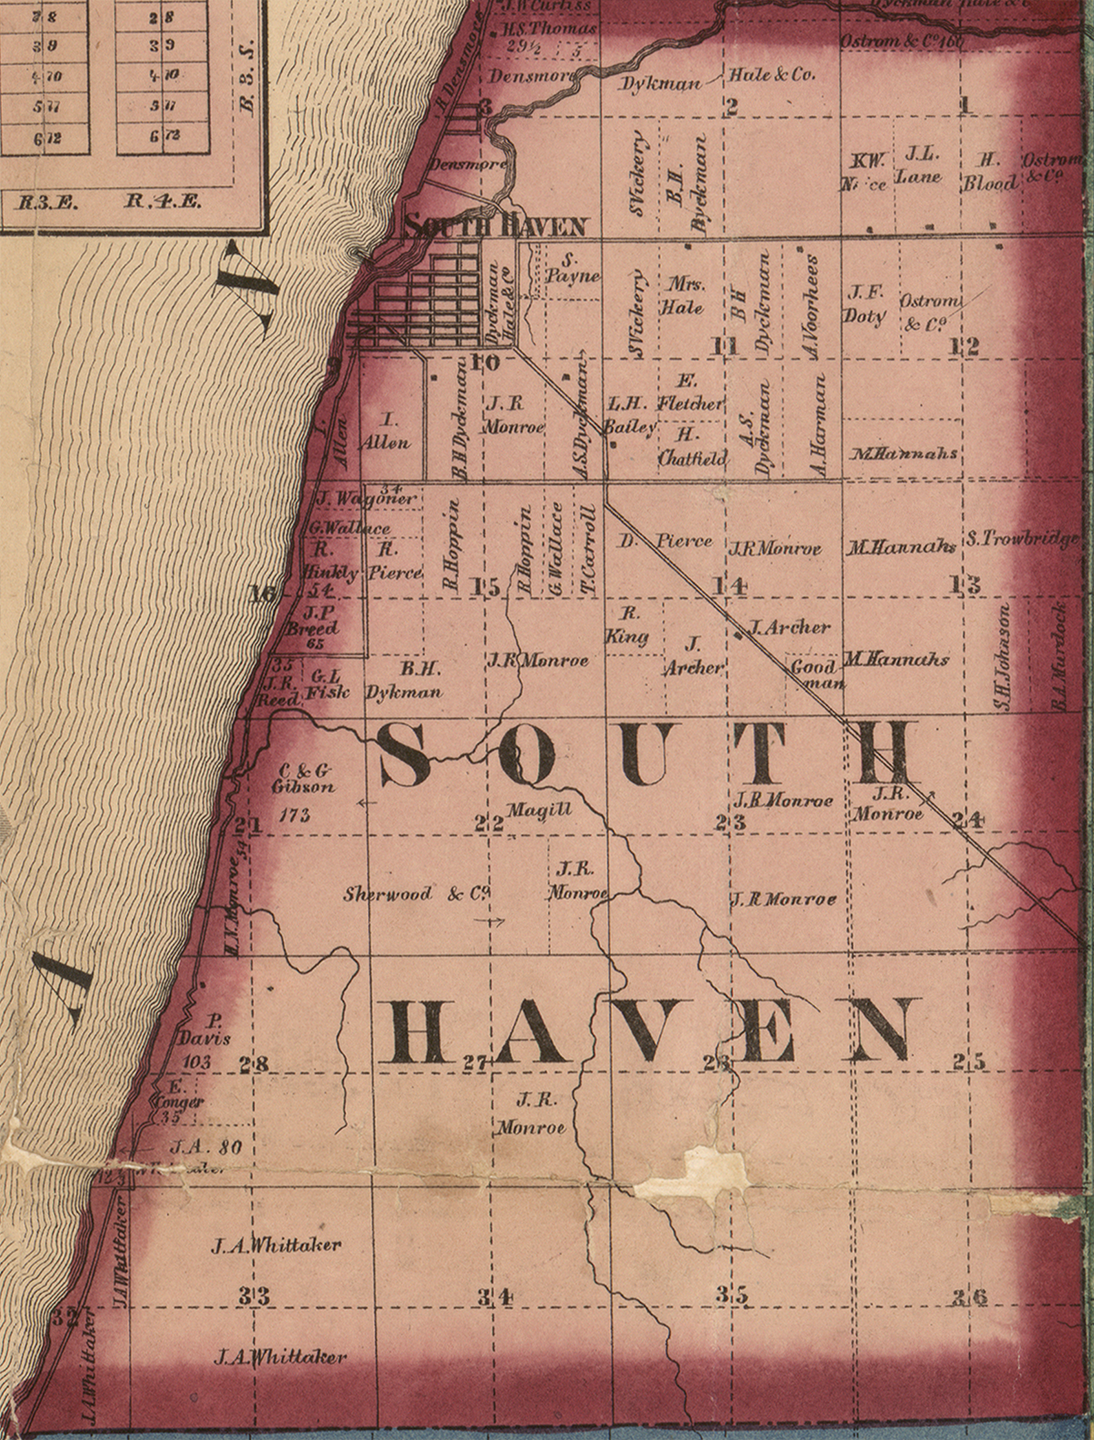 1860 South Haven Township, Michigan landownership map